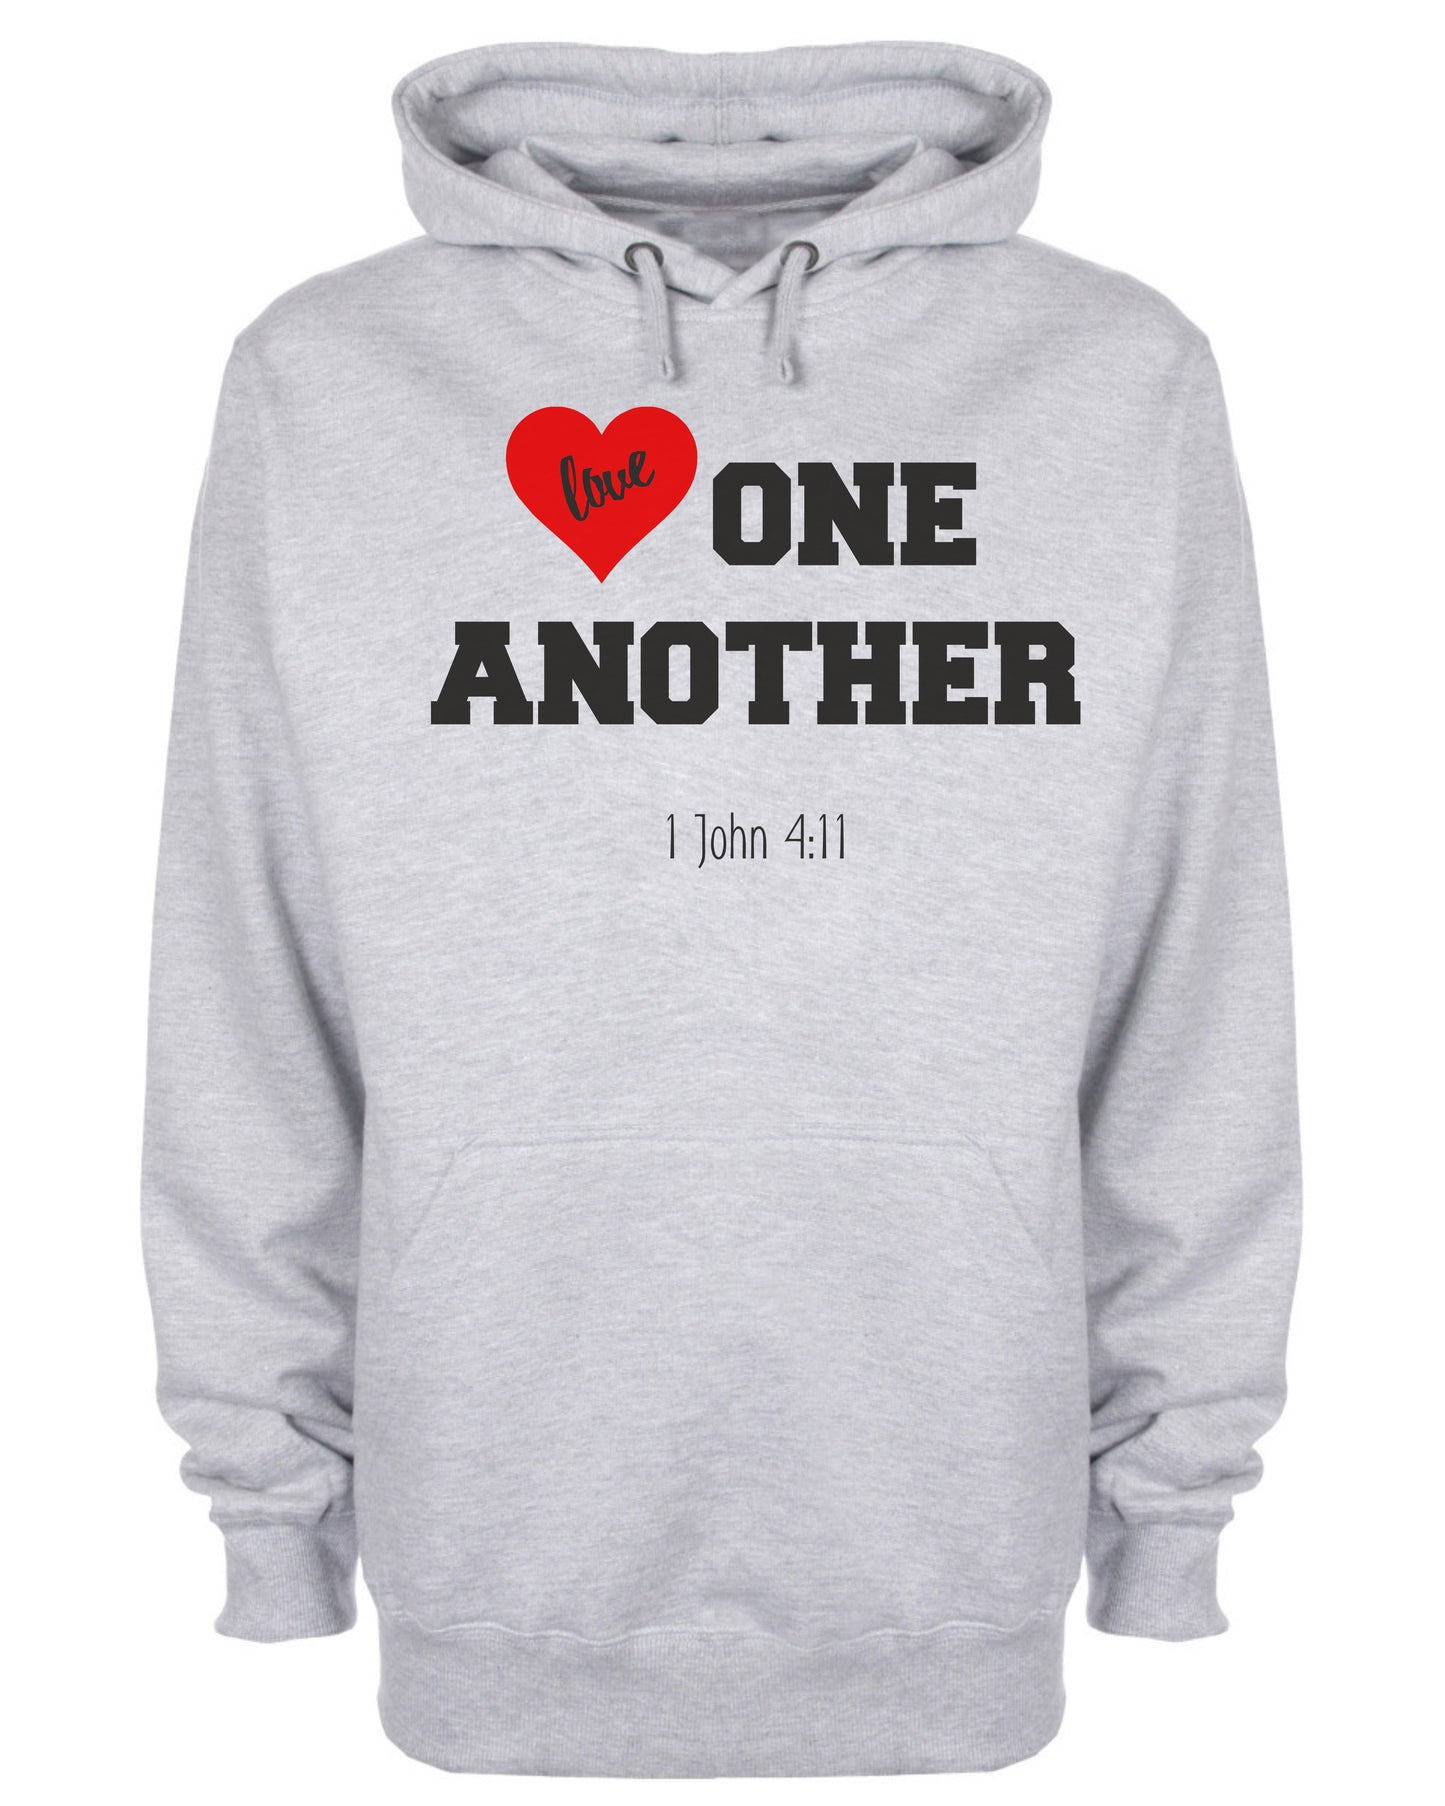 Love One Another Hoodie Jesus Christ Christian Sweatshirt